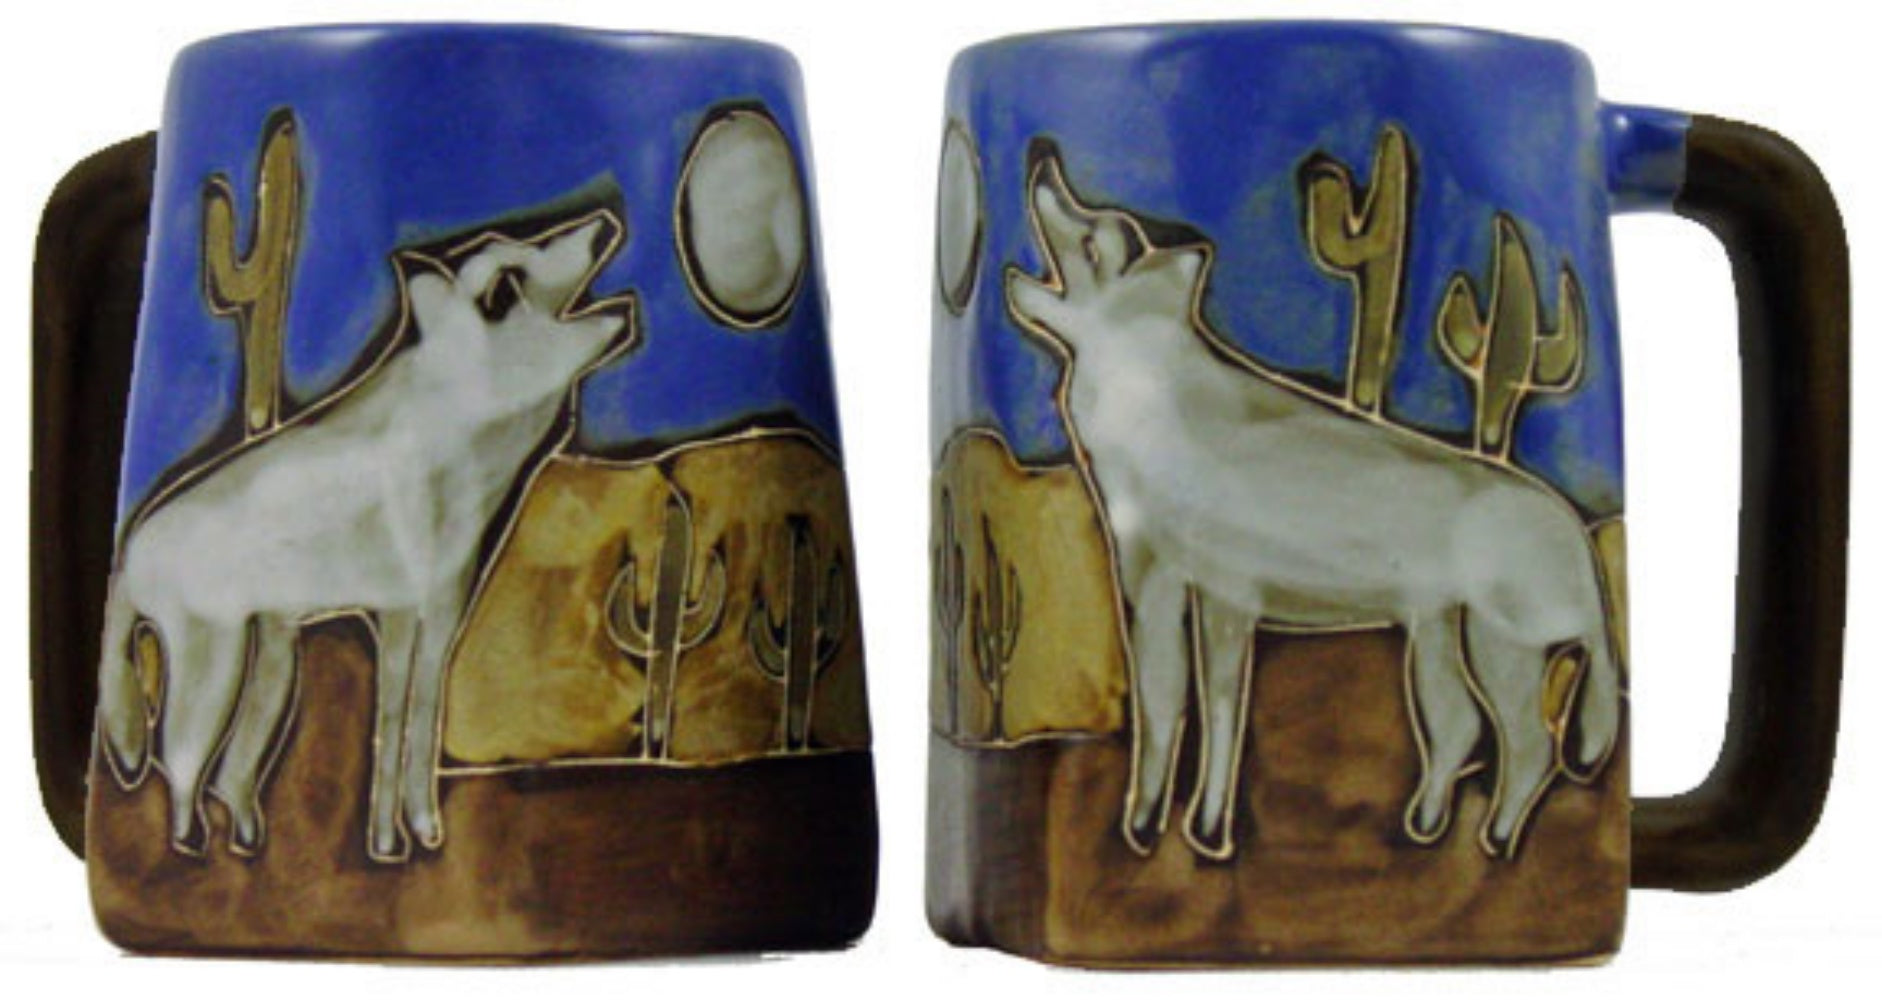 Mara Square Bottom Mug 12 oz - Howling Wolves   511S4